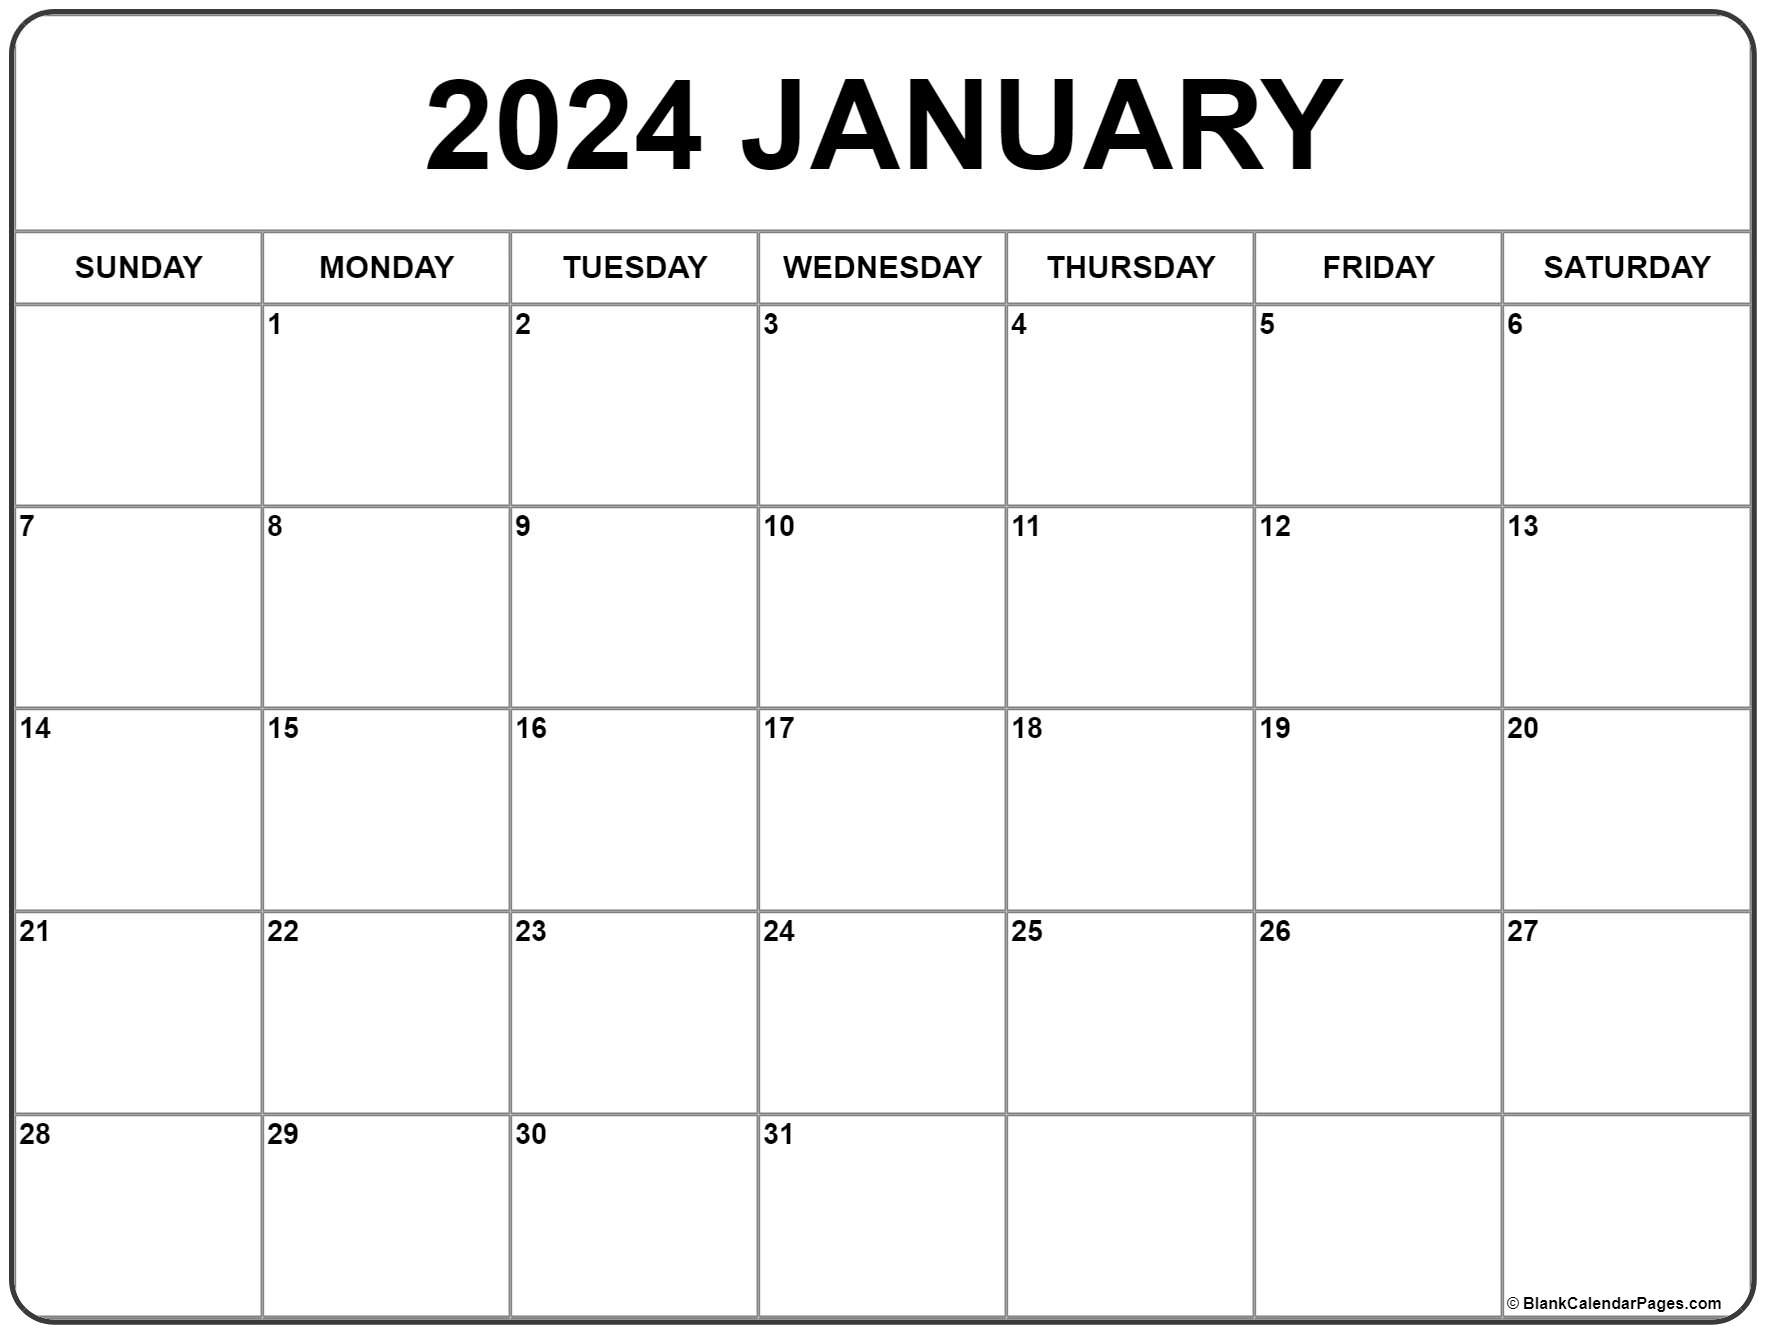 January 2024 Calendar | Free Printable Calendar for Printable Free Calendar January 2024